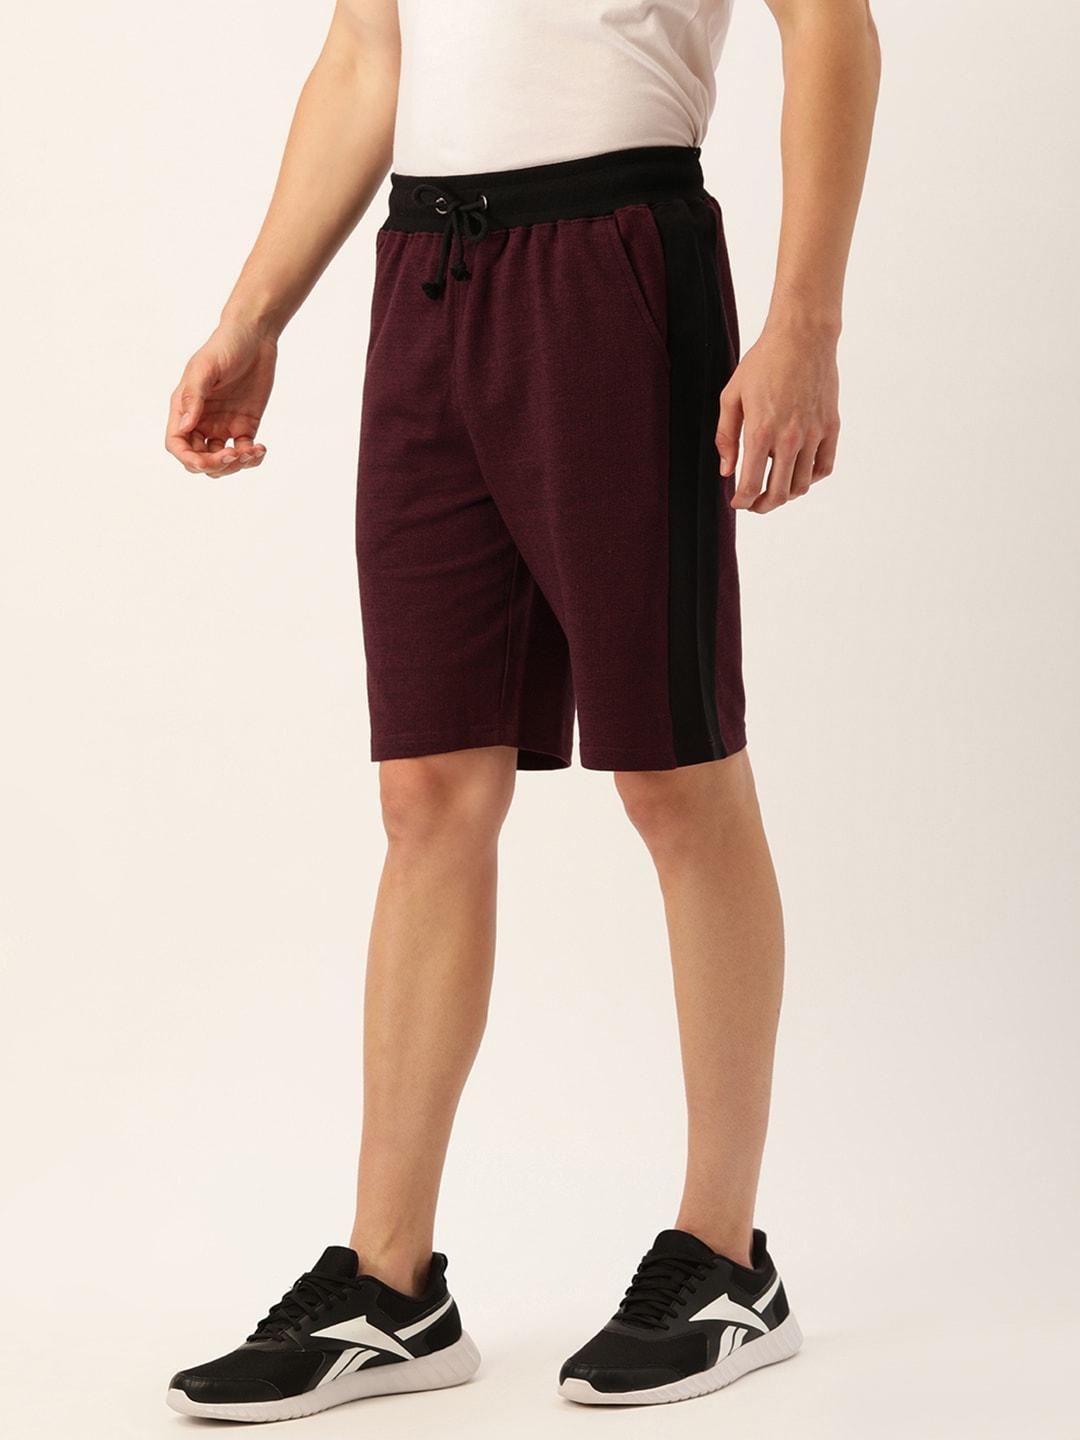 ARISE Men Maroon Solid Shorts